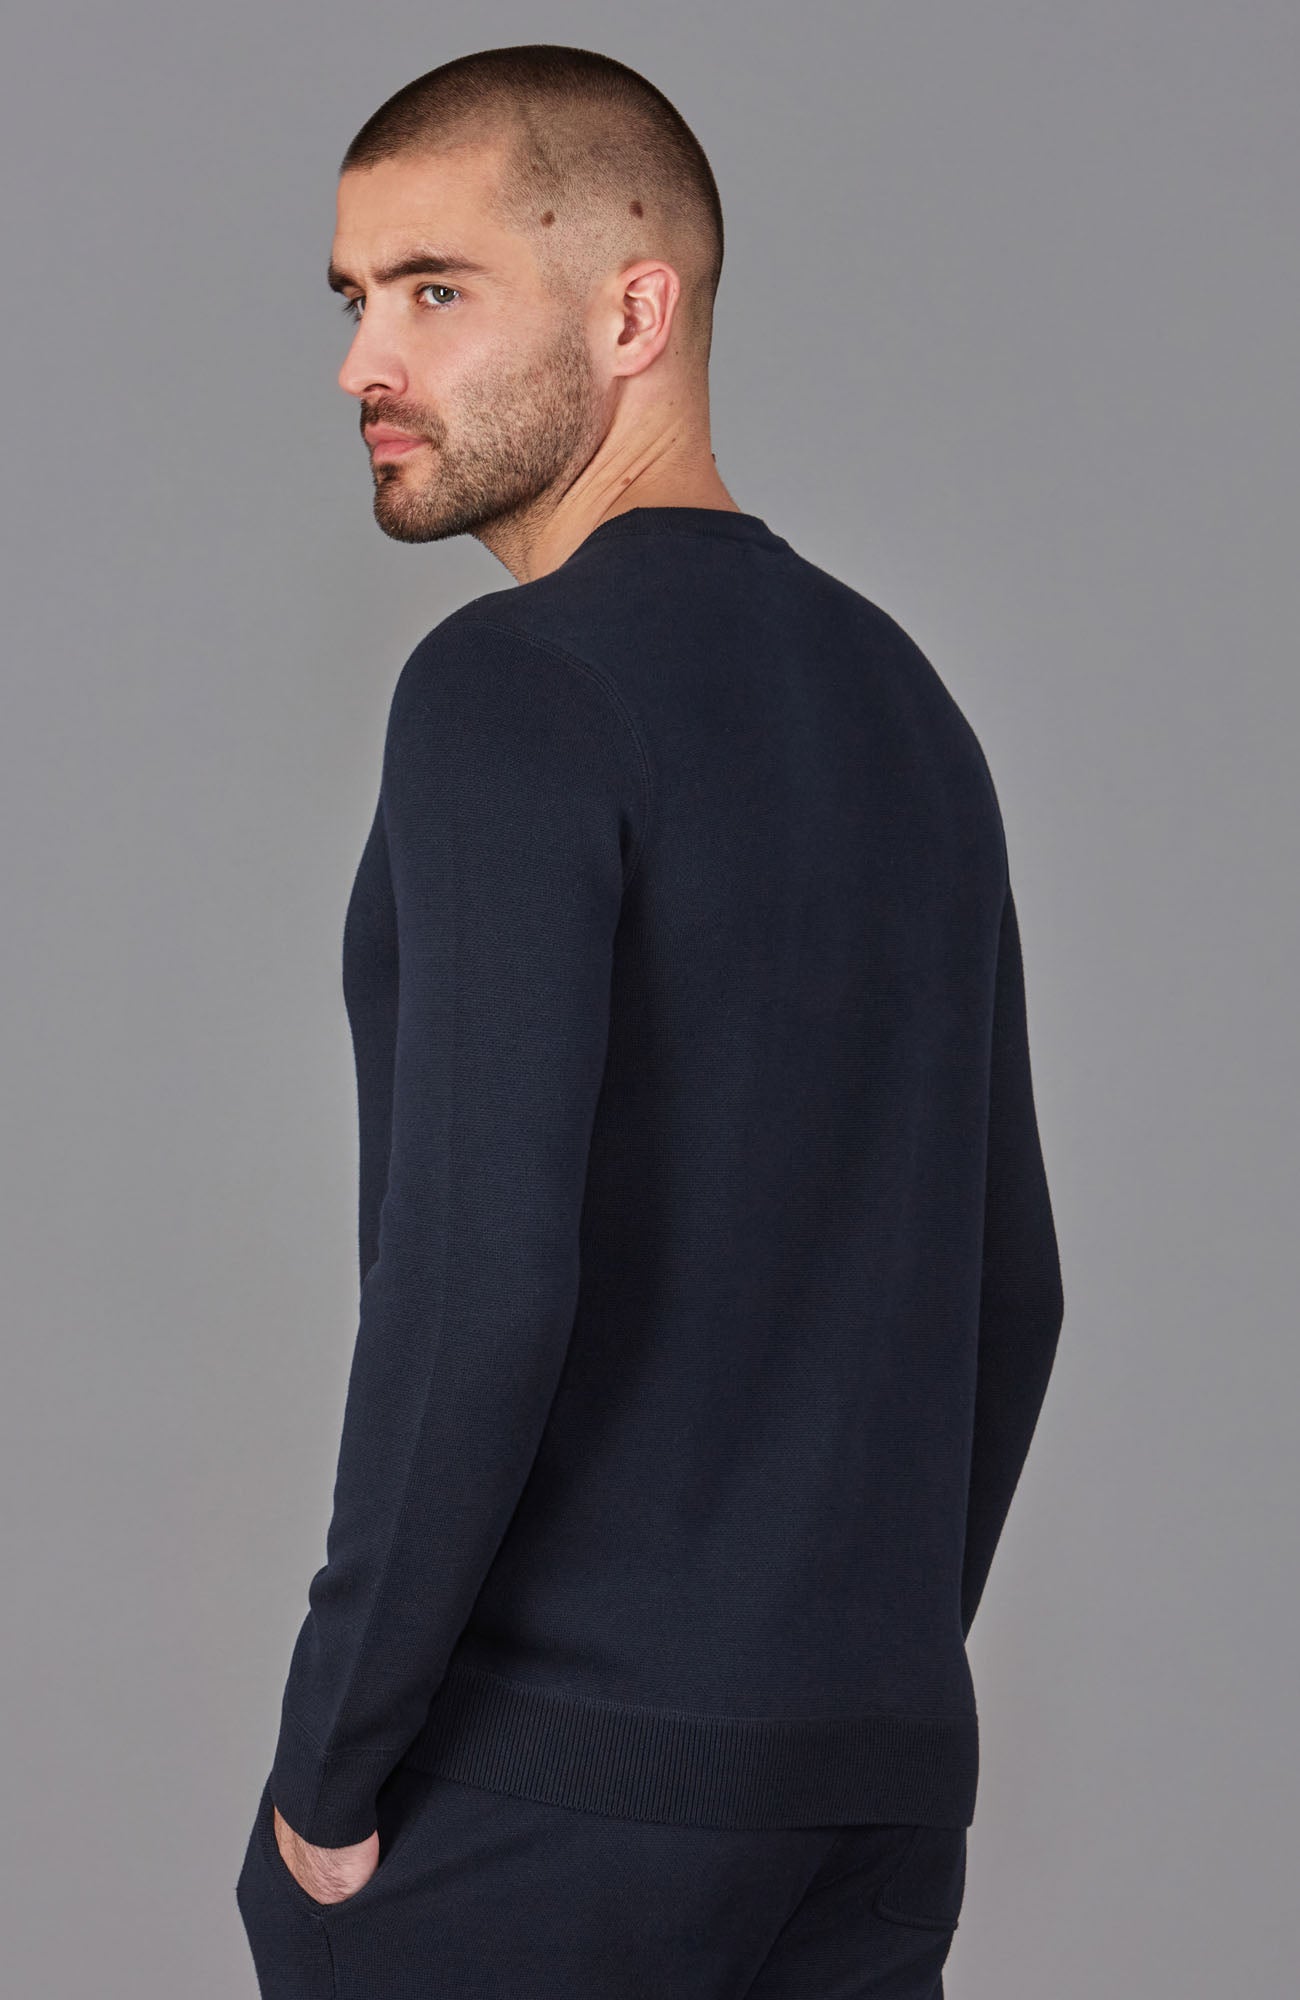 mens navy knitted sweatshirt